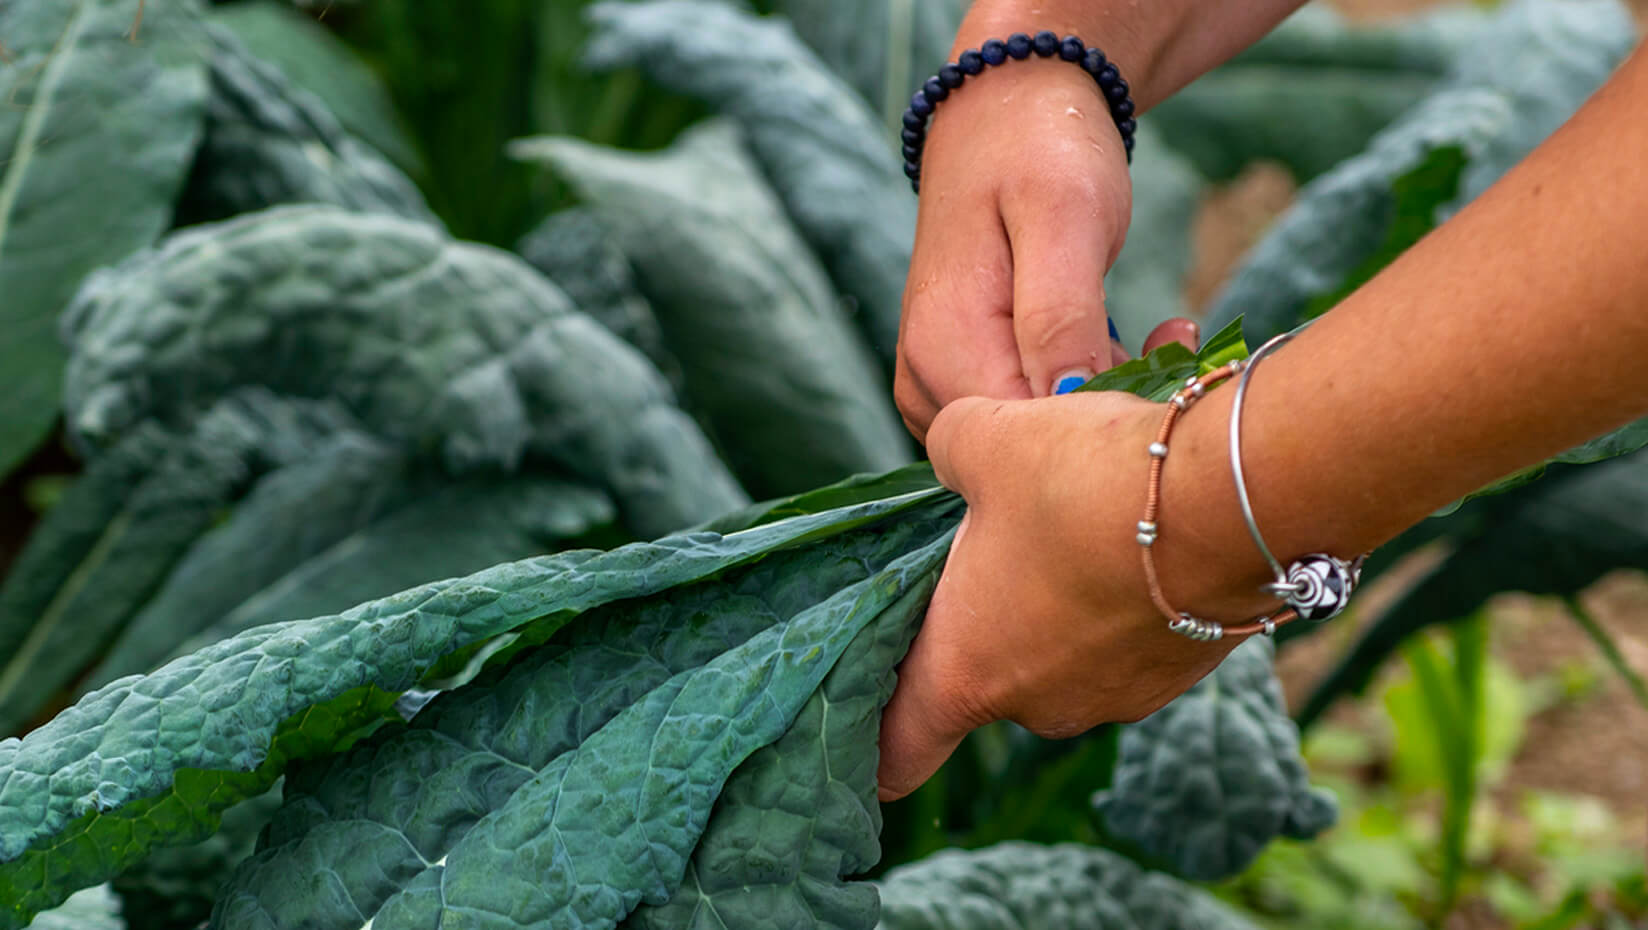 Hands harvesting kale in a field